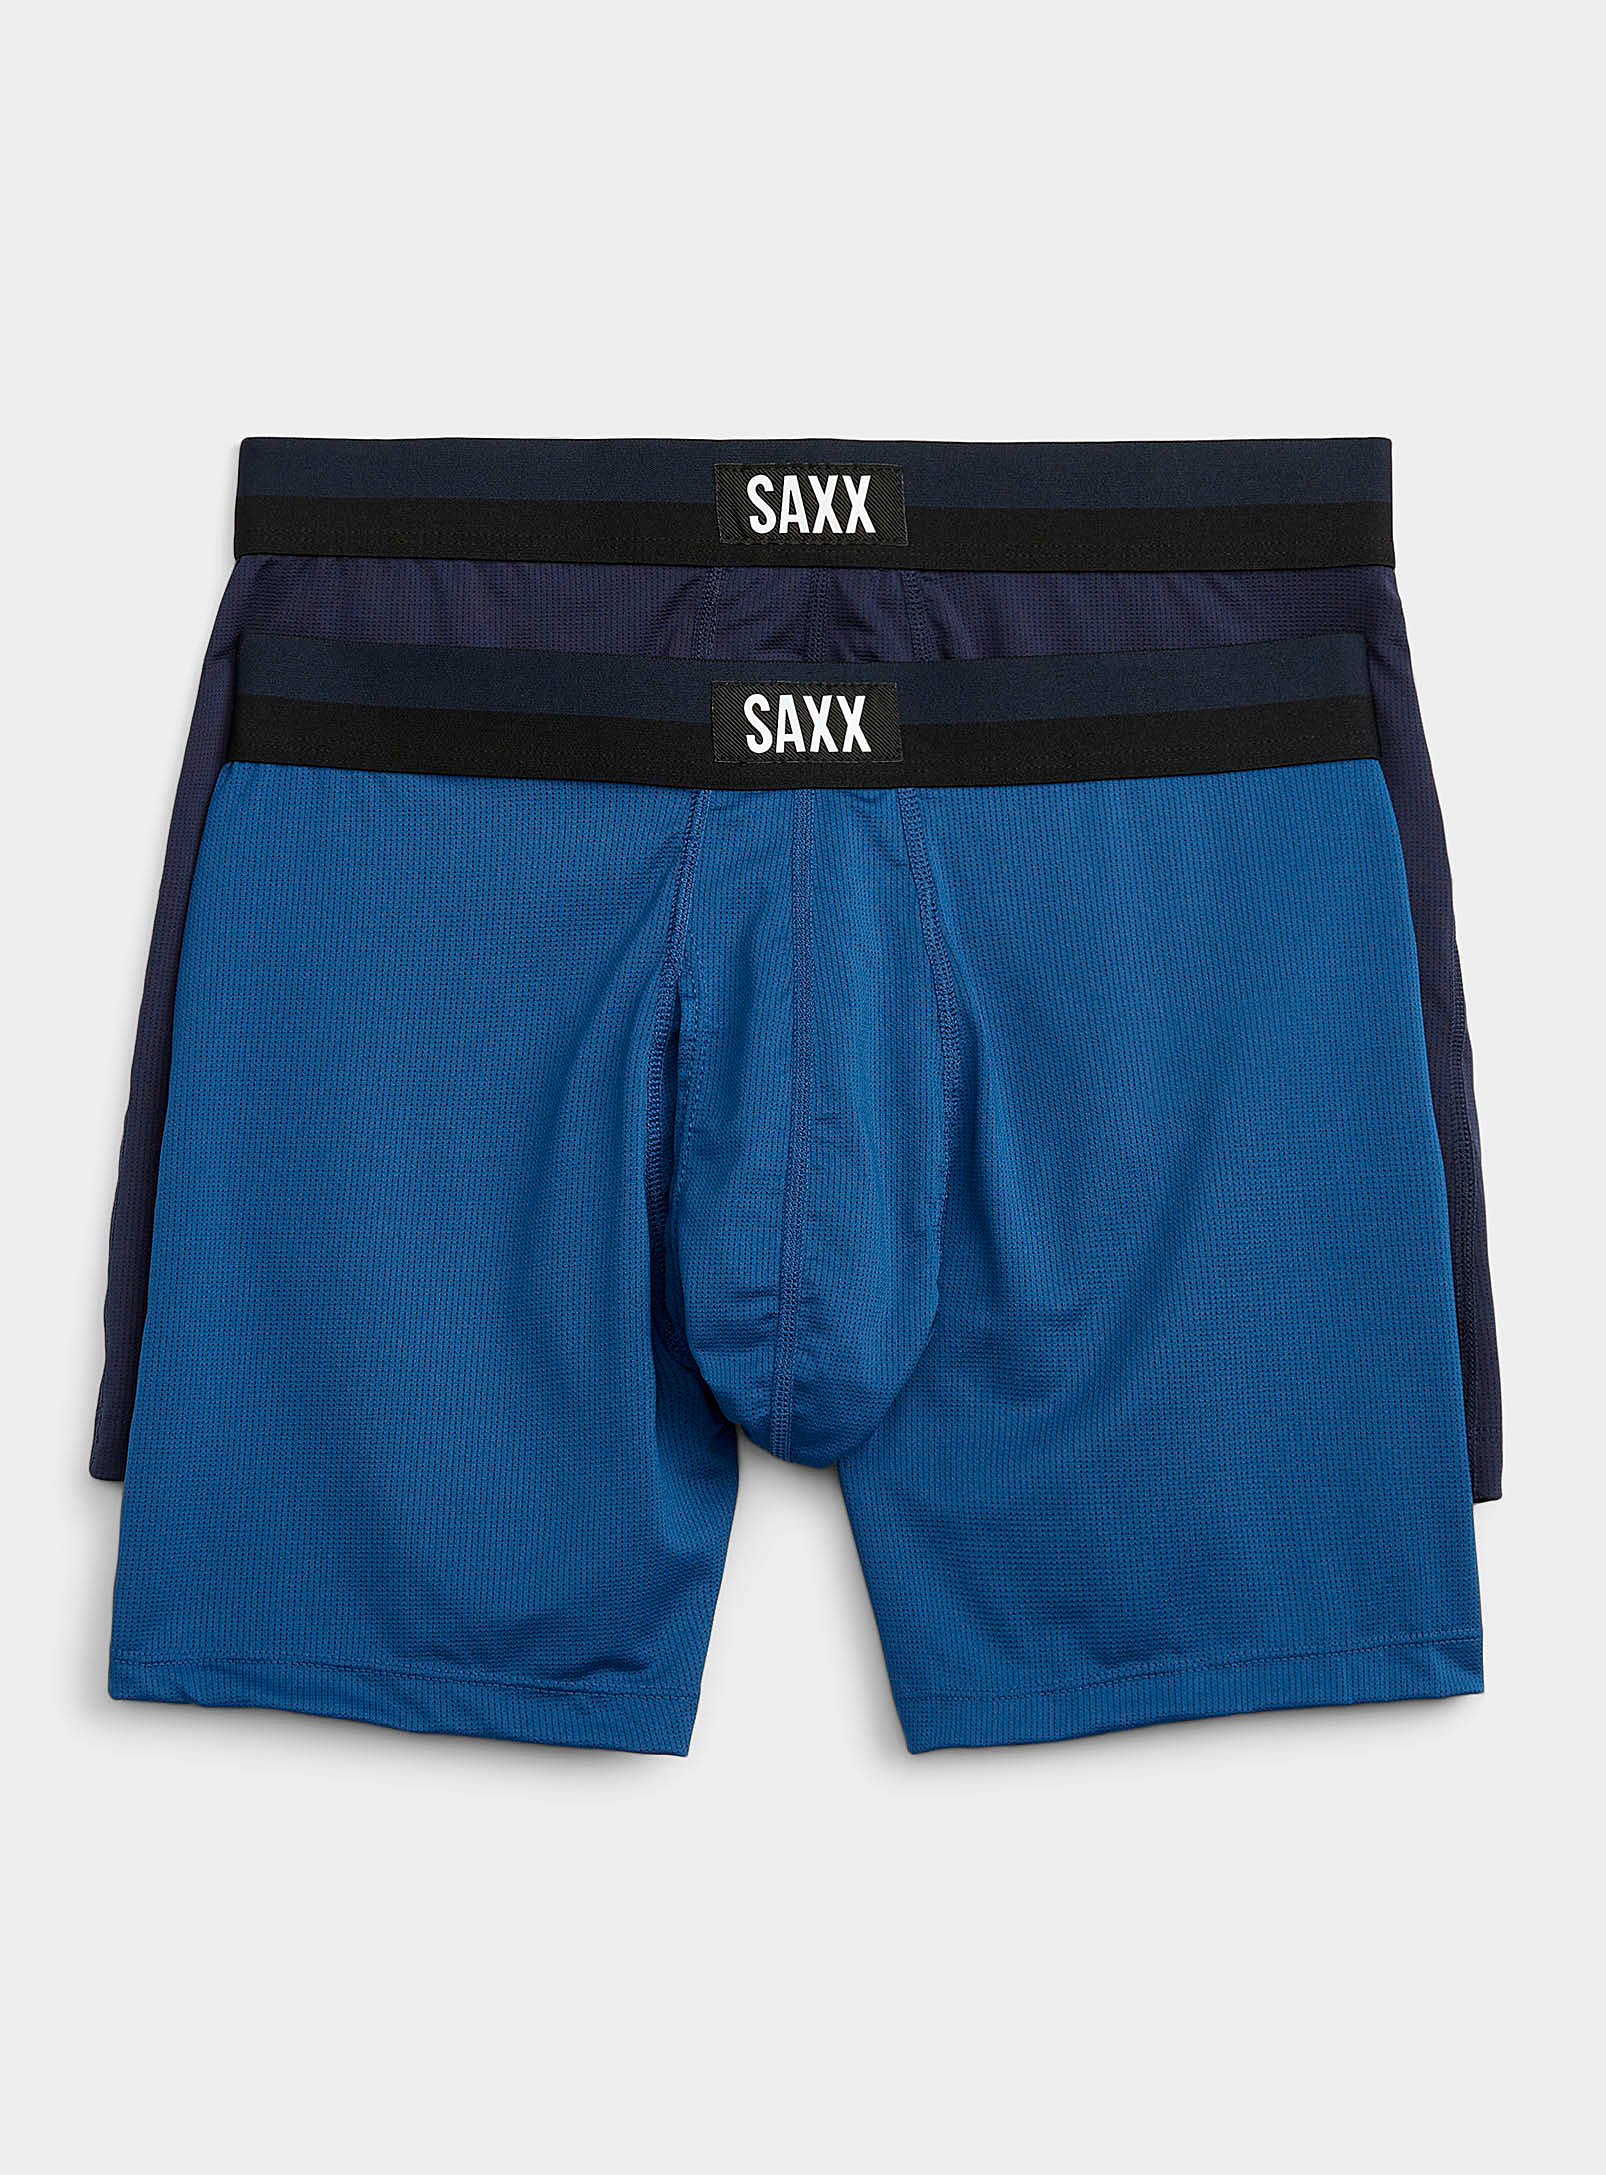 Saxx 2-pack In Marine Blue